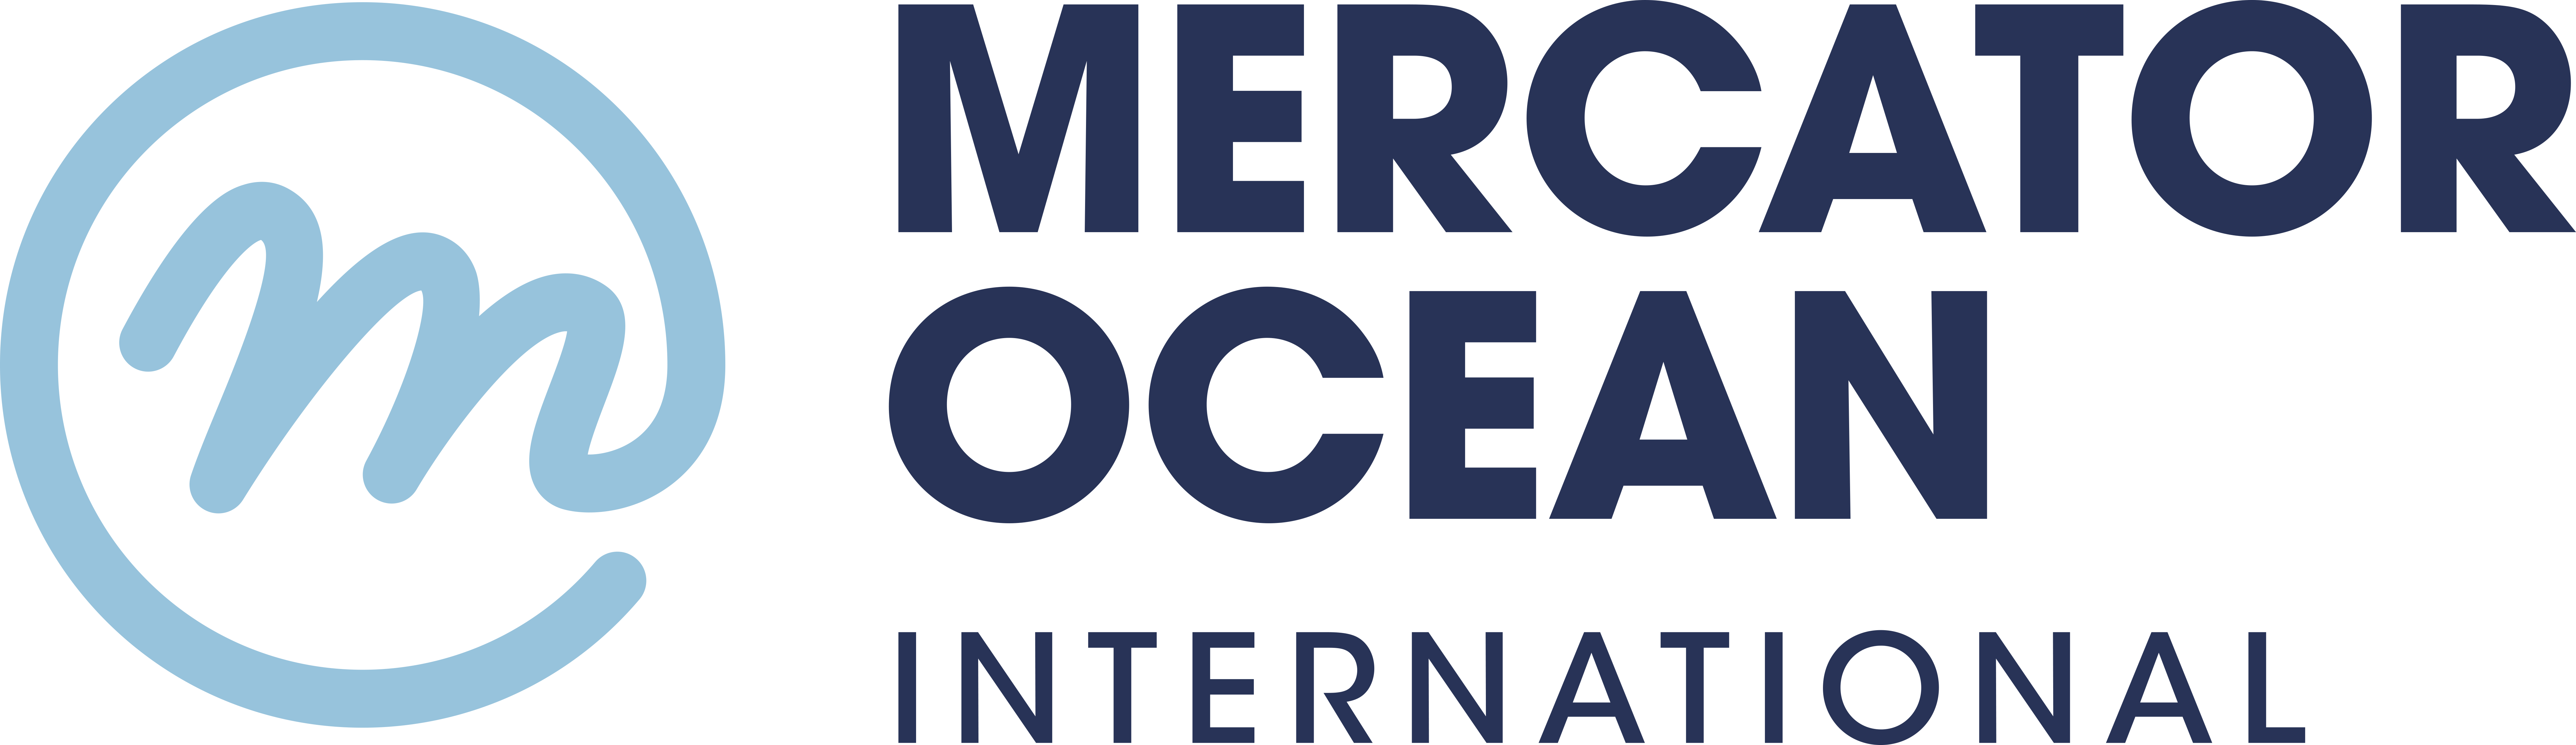 Mecator Ocean International